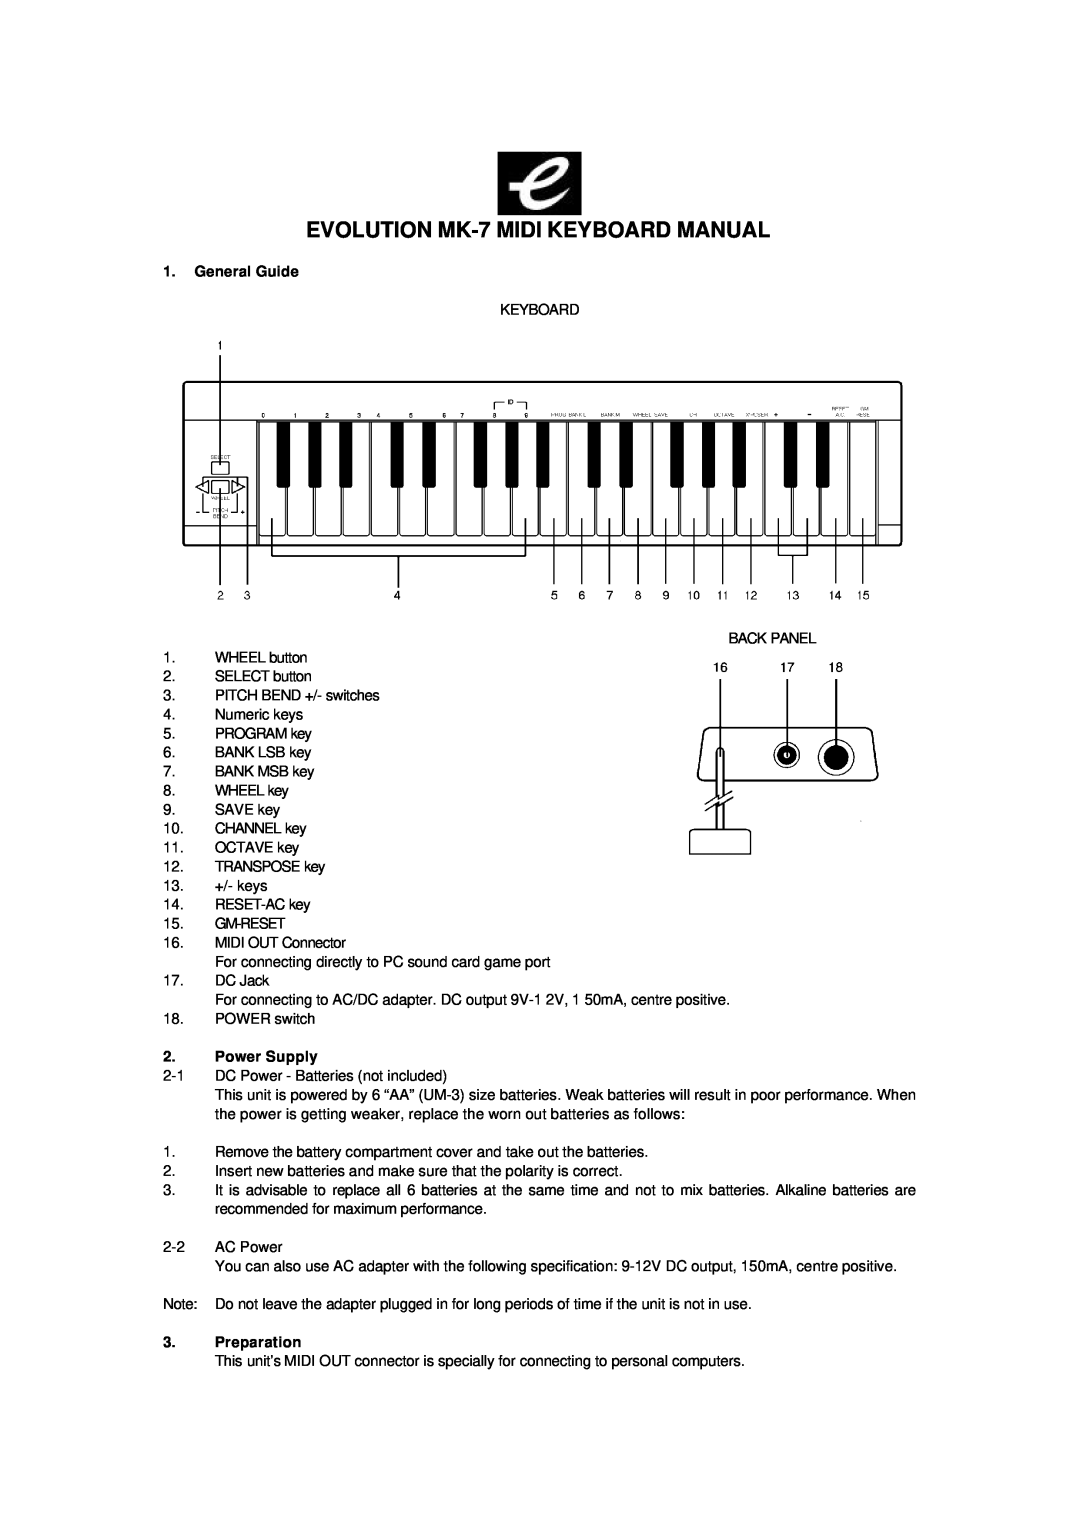 Evolution Technologies manual General Guide, Power Supply, Preparation, EVOLUTION MK-7 MIDI KEYBOARD MANUAL 